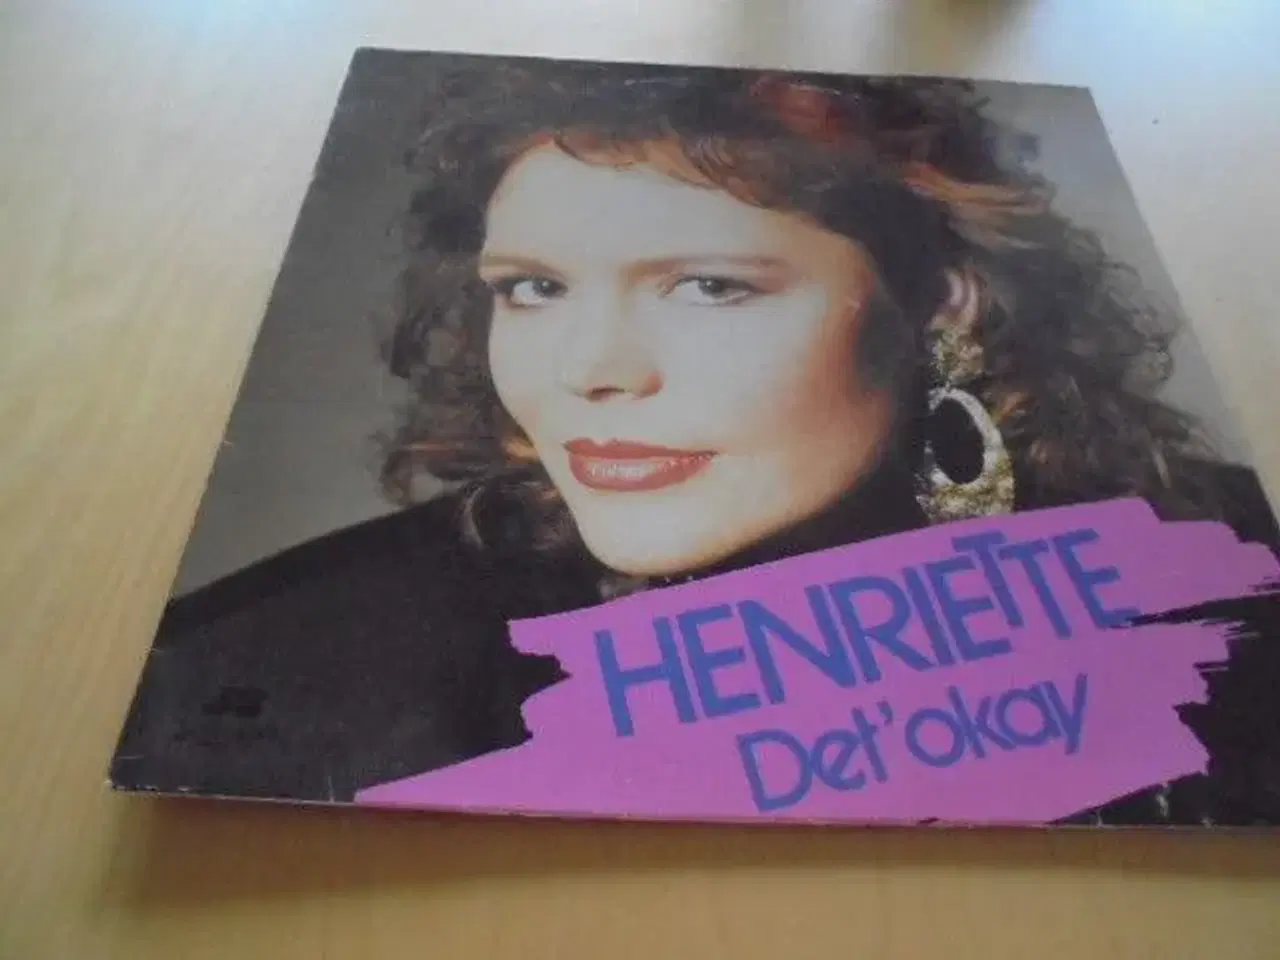 Billede 1 - LP: Henriette - Det' okay - fin stand 